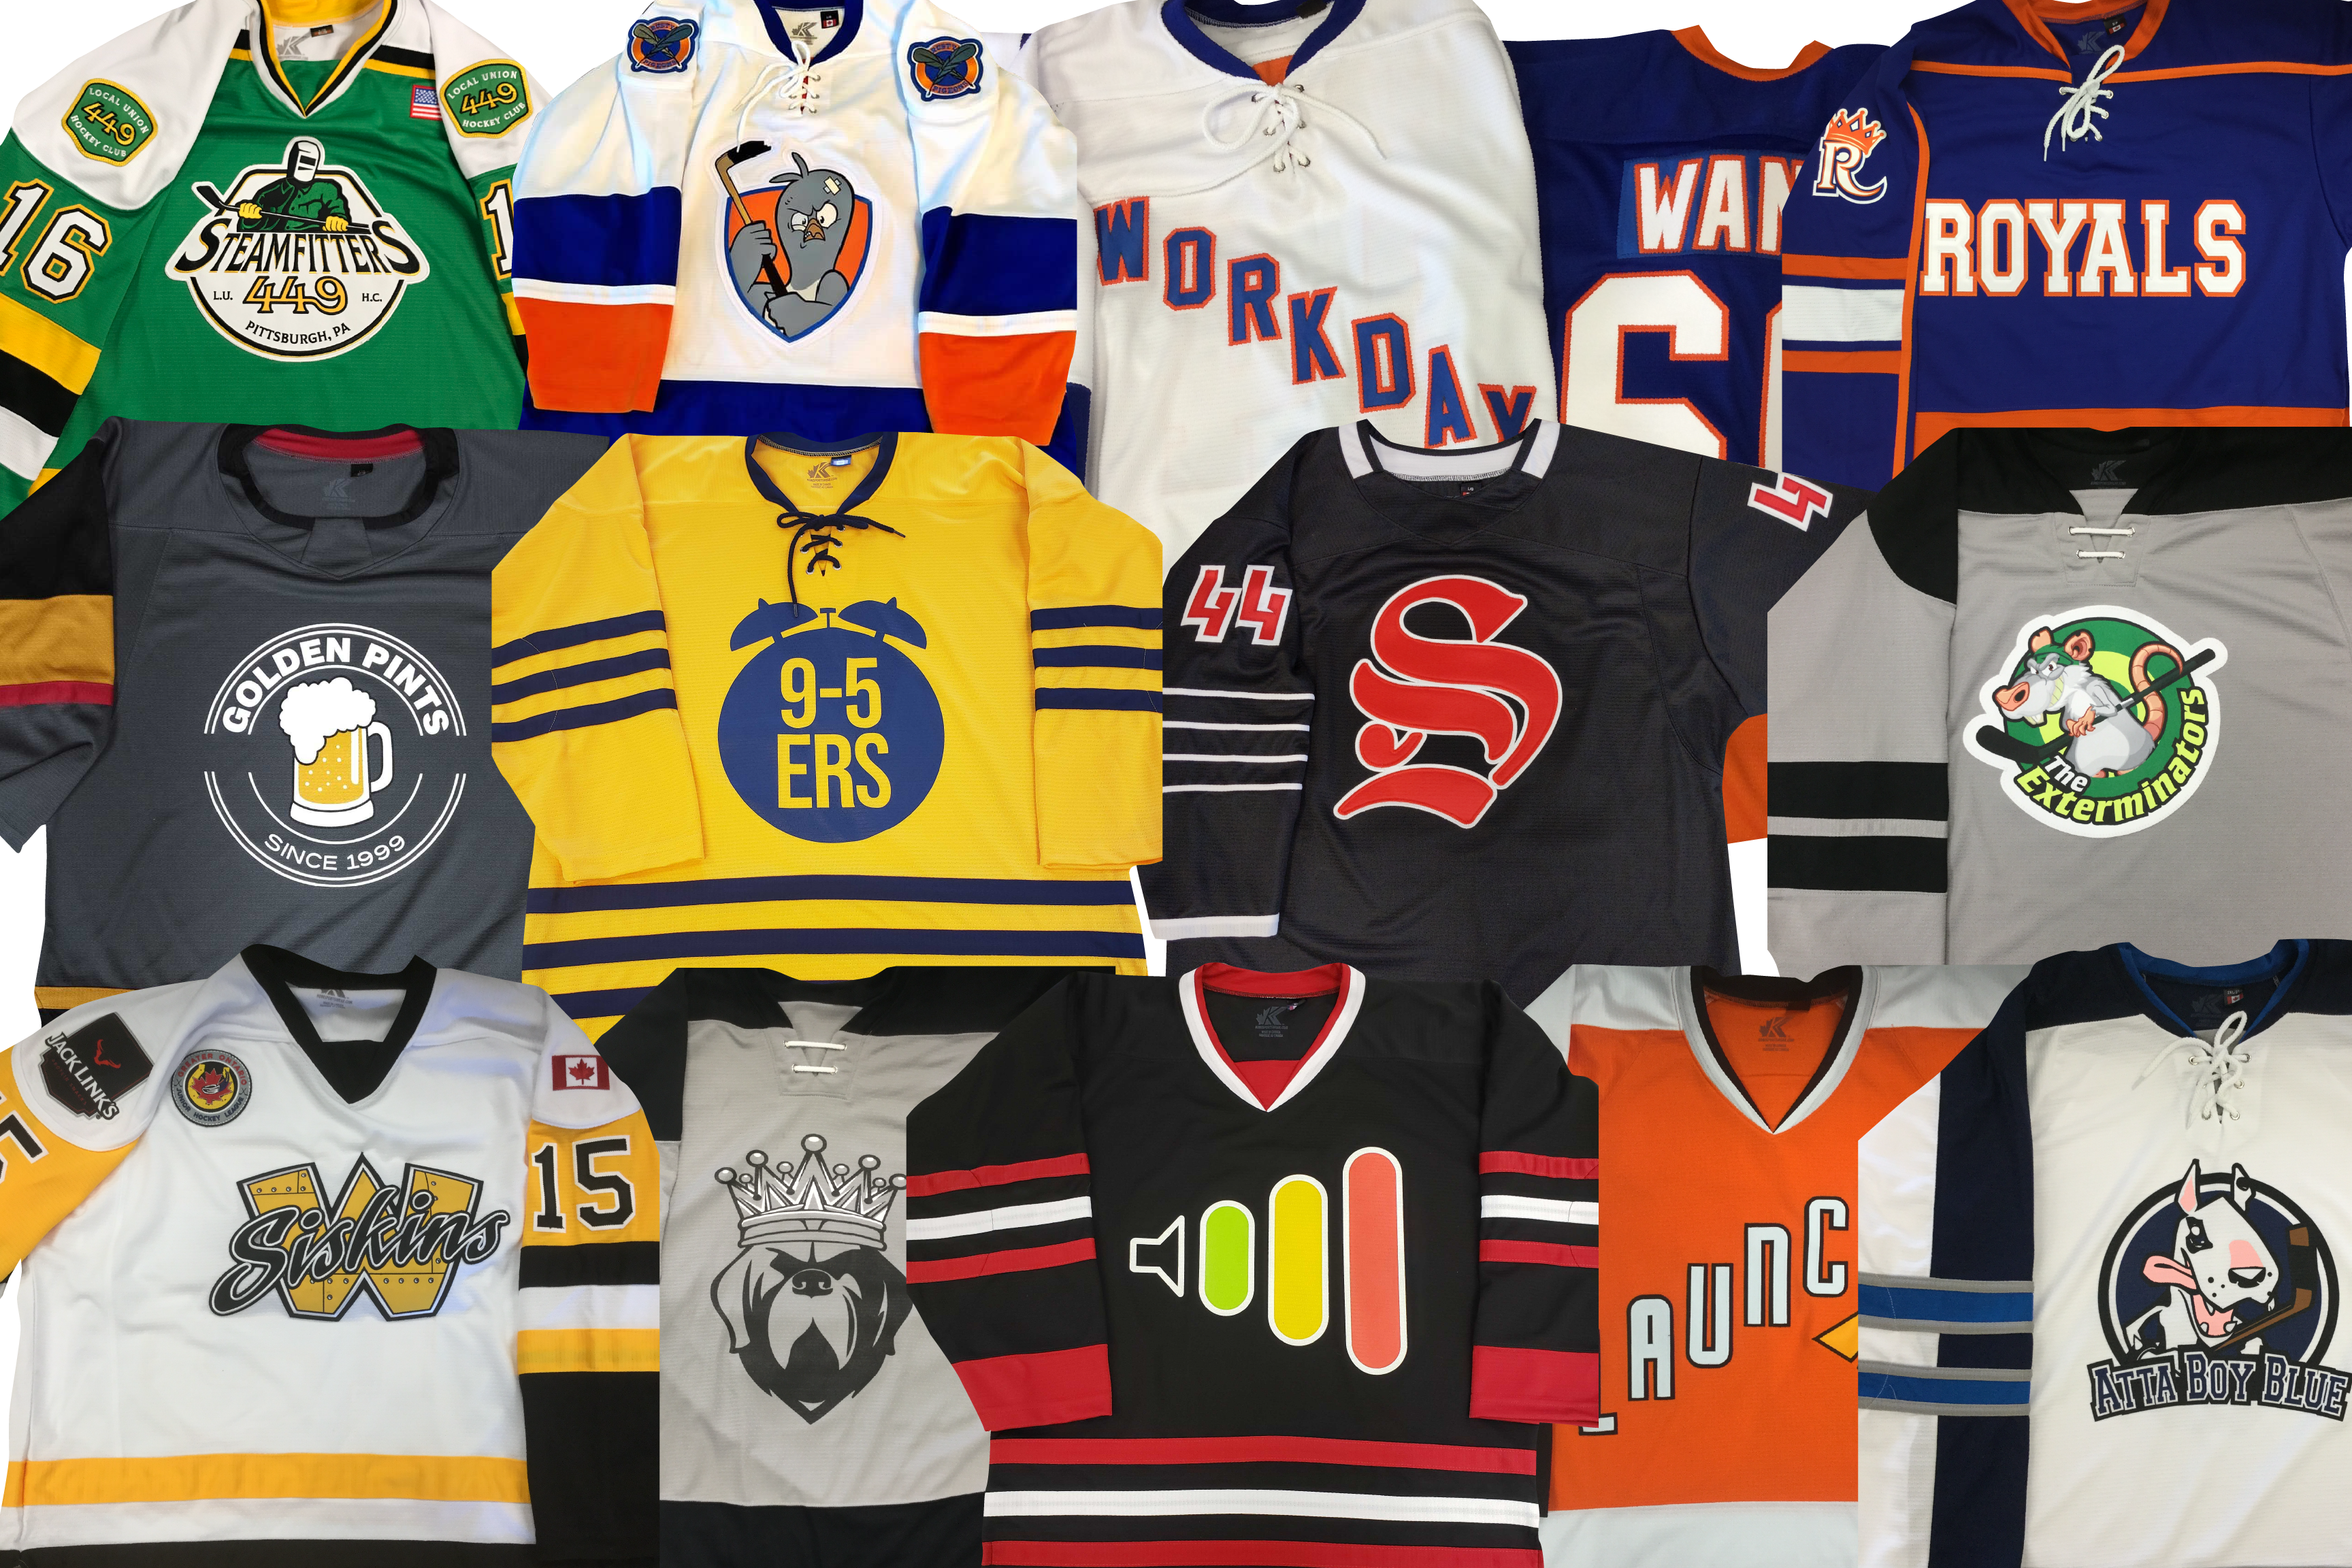 NHL Concept Series. Minnesota North Stars Home Uniform.